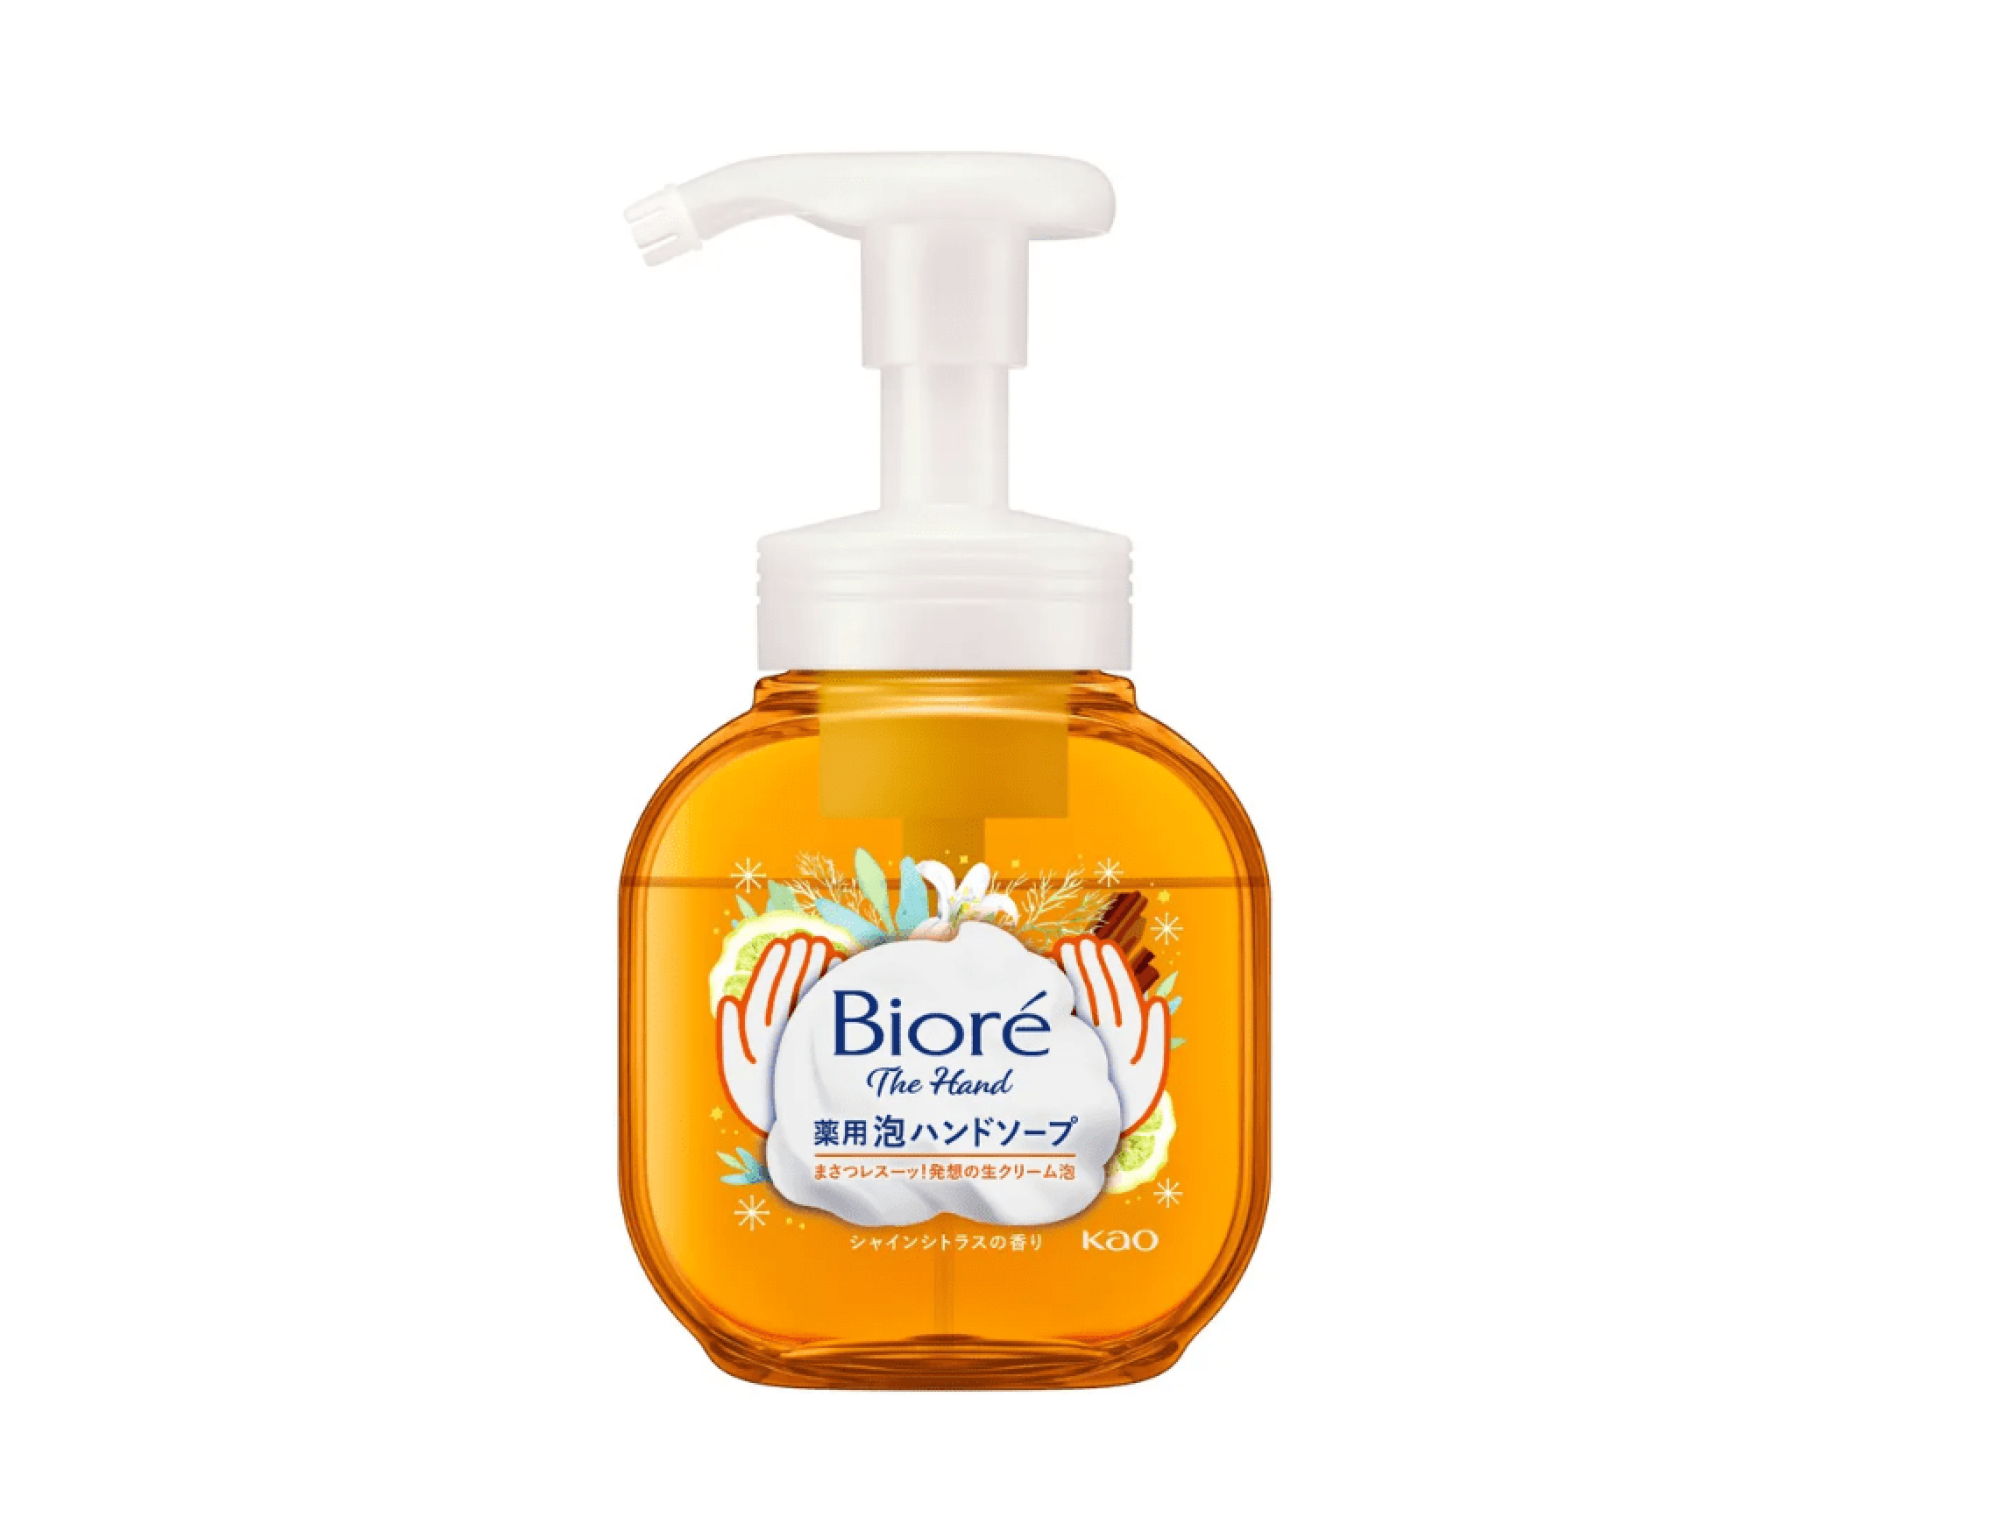 Kao Biore The Hand Foam Shine Citrus Мыло-пенка для рук антибактериальная с ароматом Цитрусов 250 мл